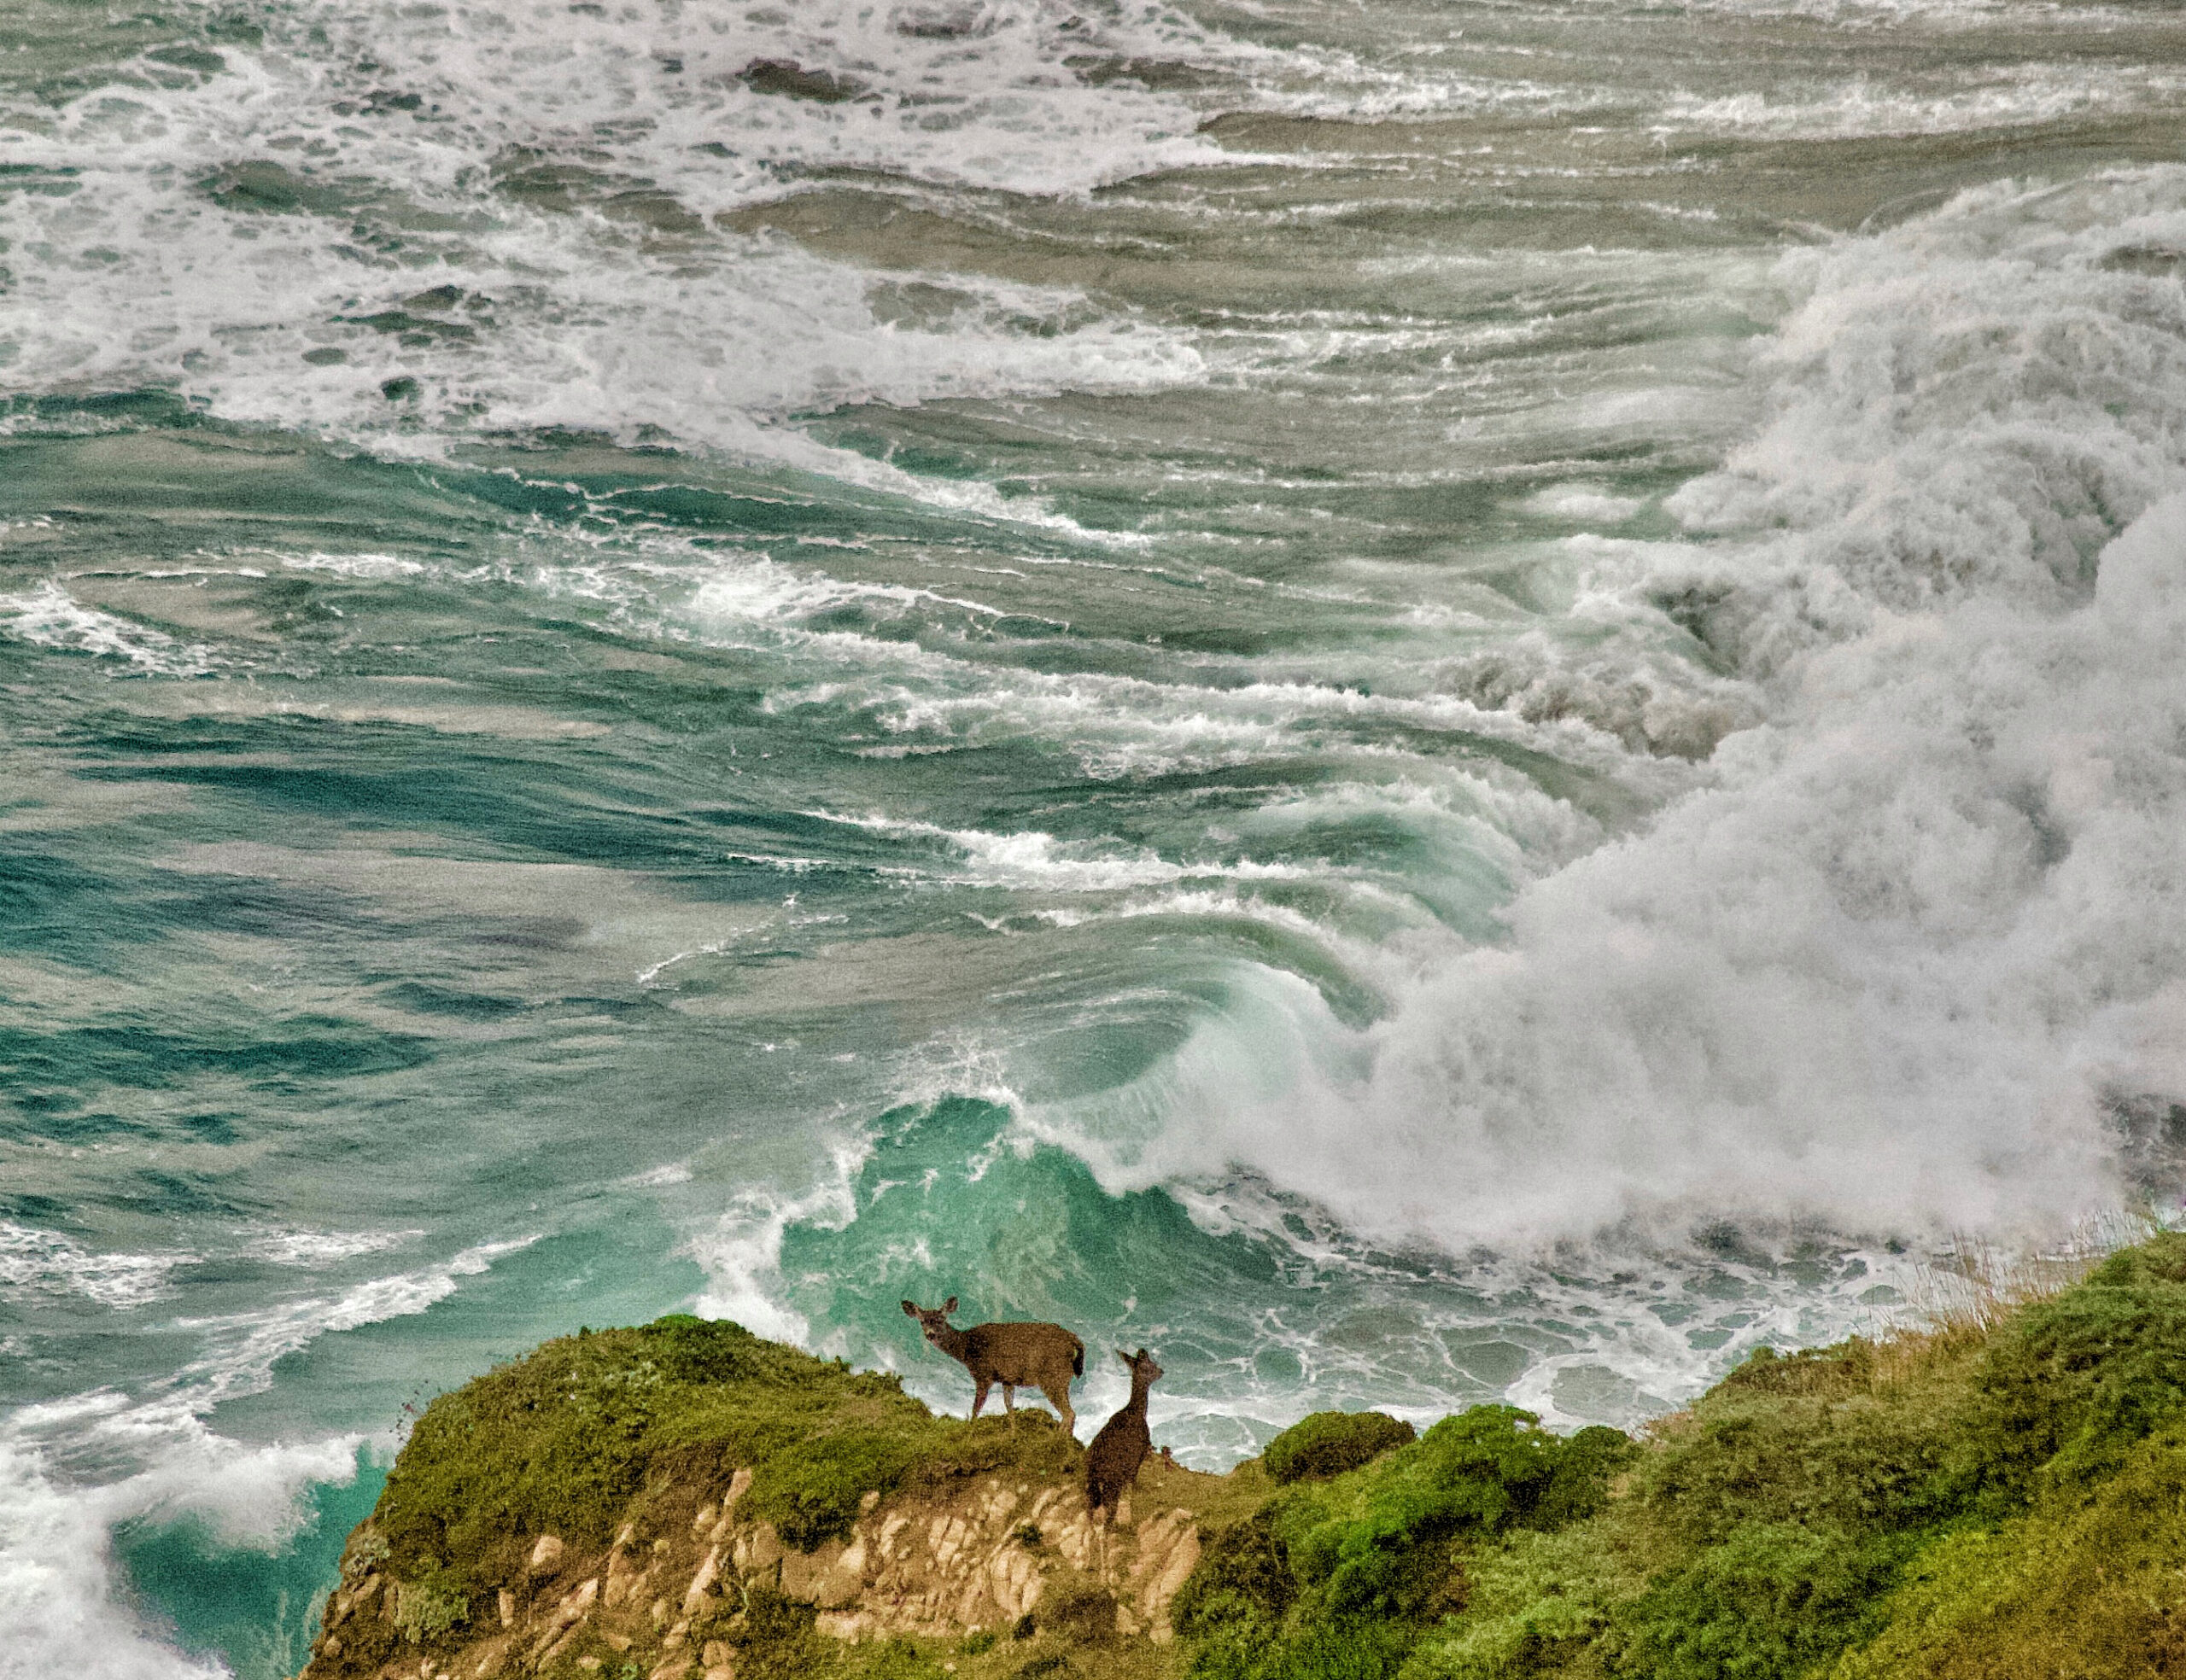 Two deer standing on a cliff overlooking the ocean.